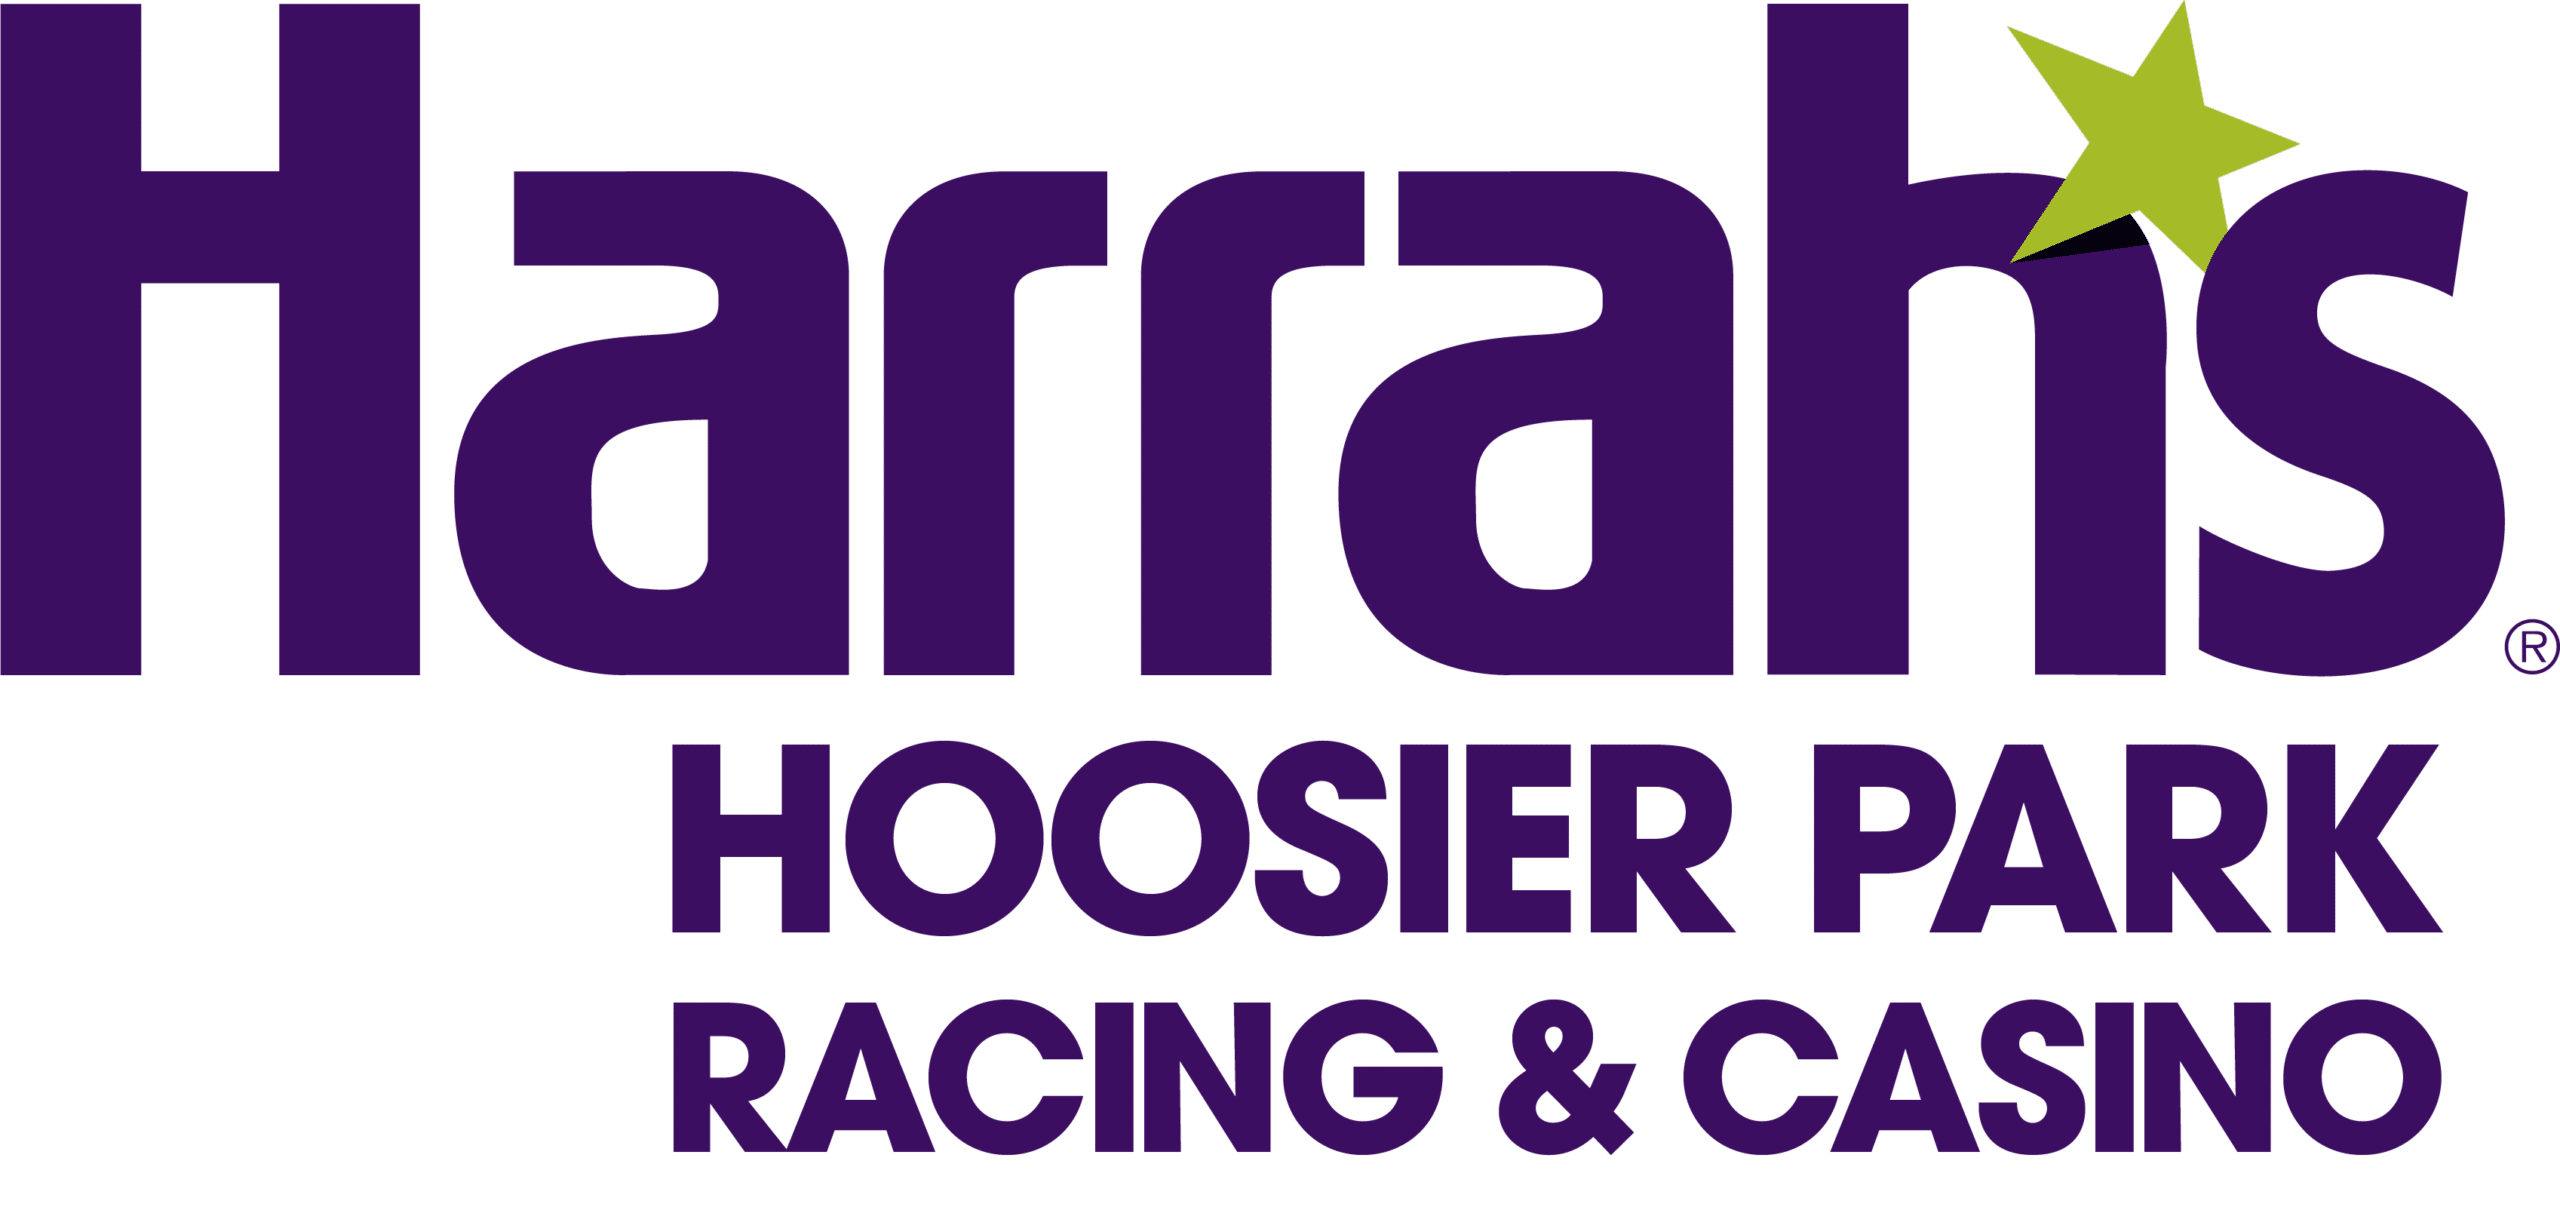 Harrahs-HoosierPark-Racing&Casino-Purple-4c